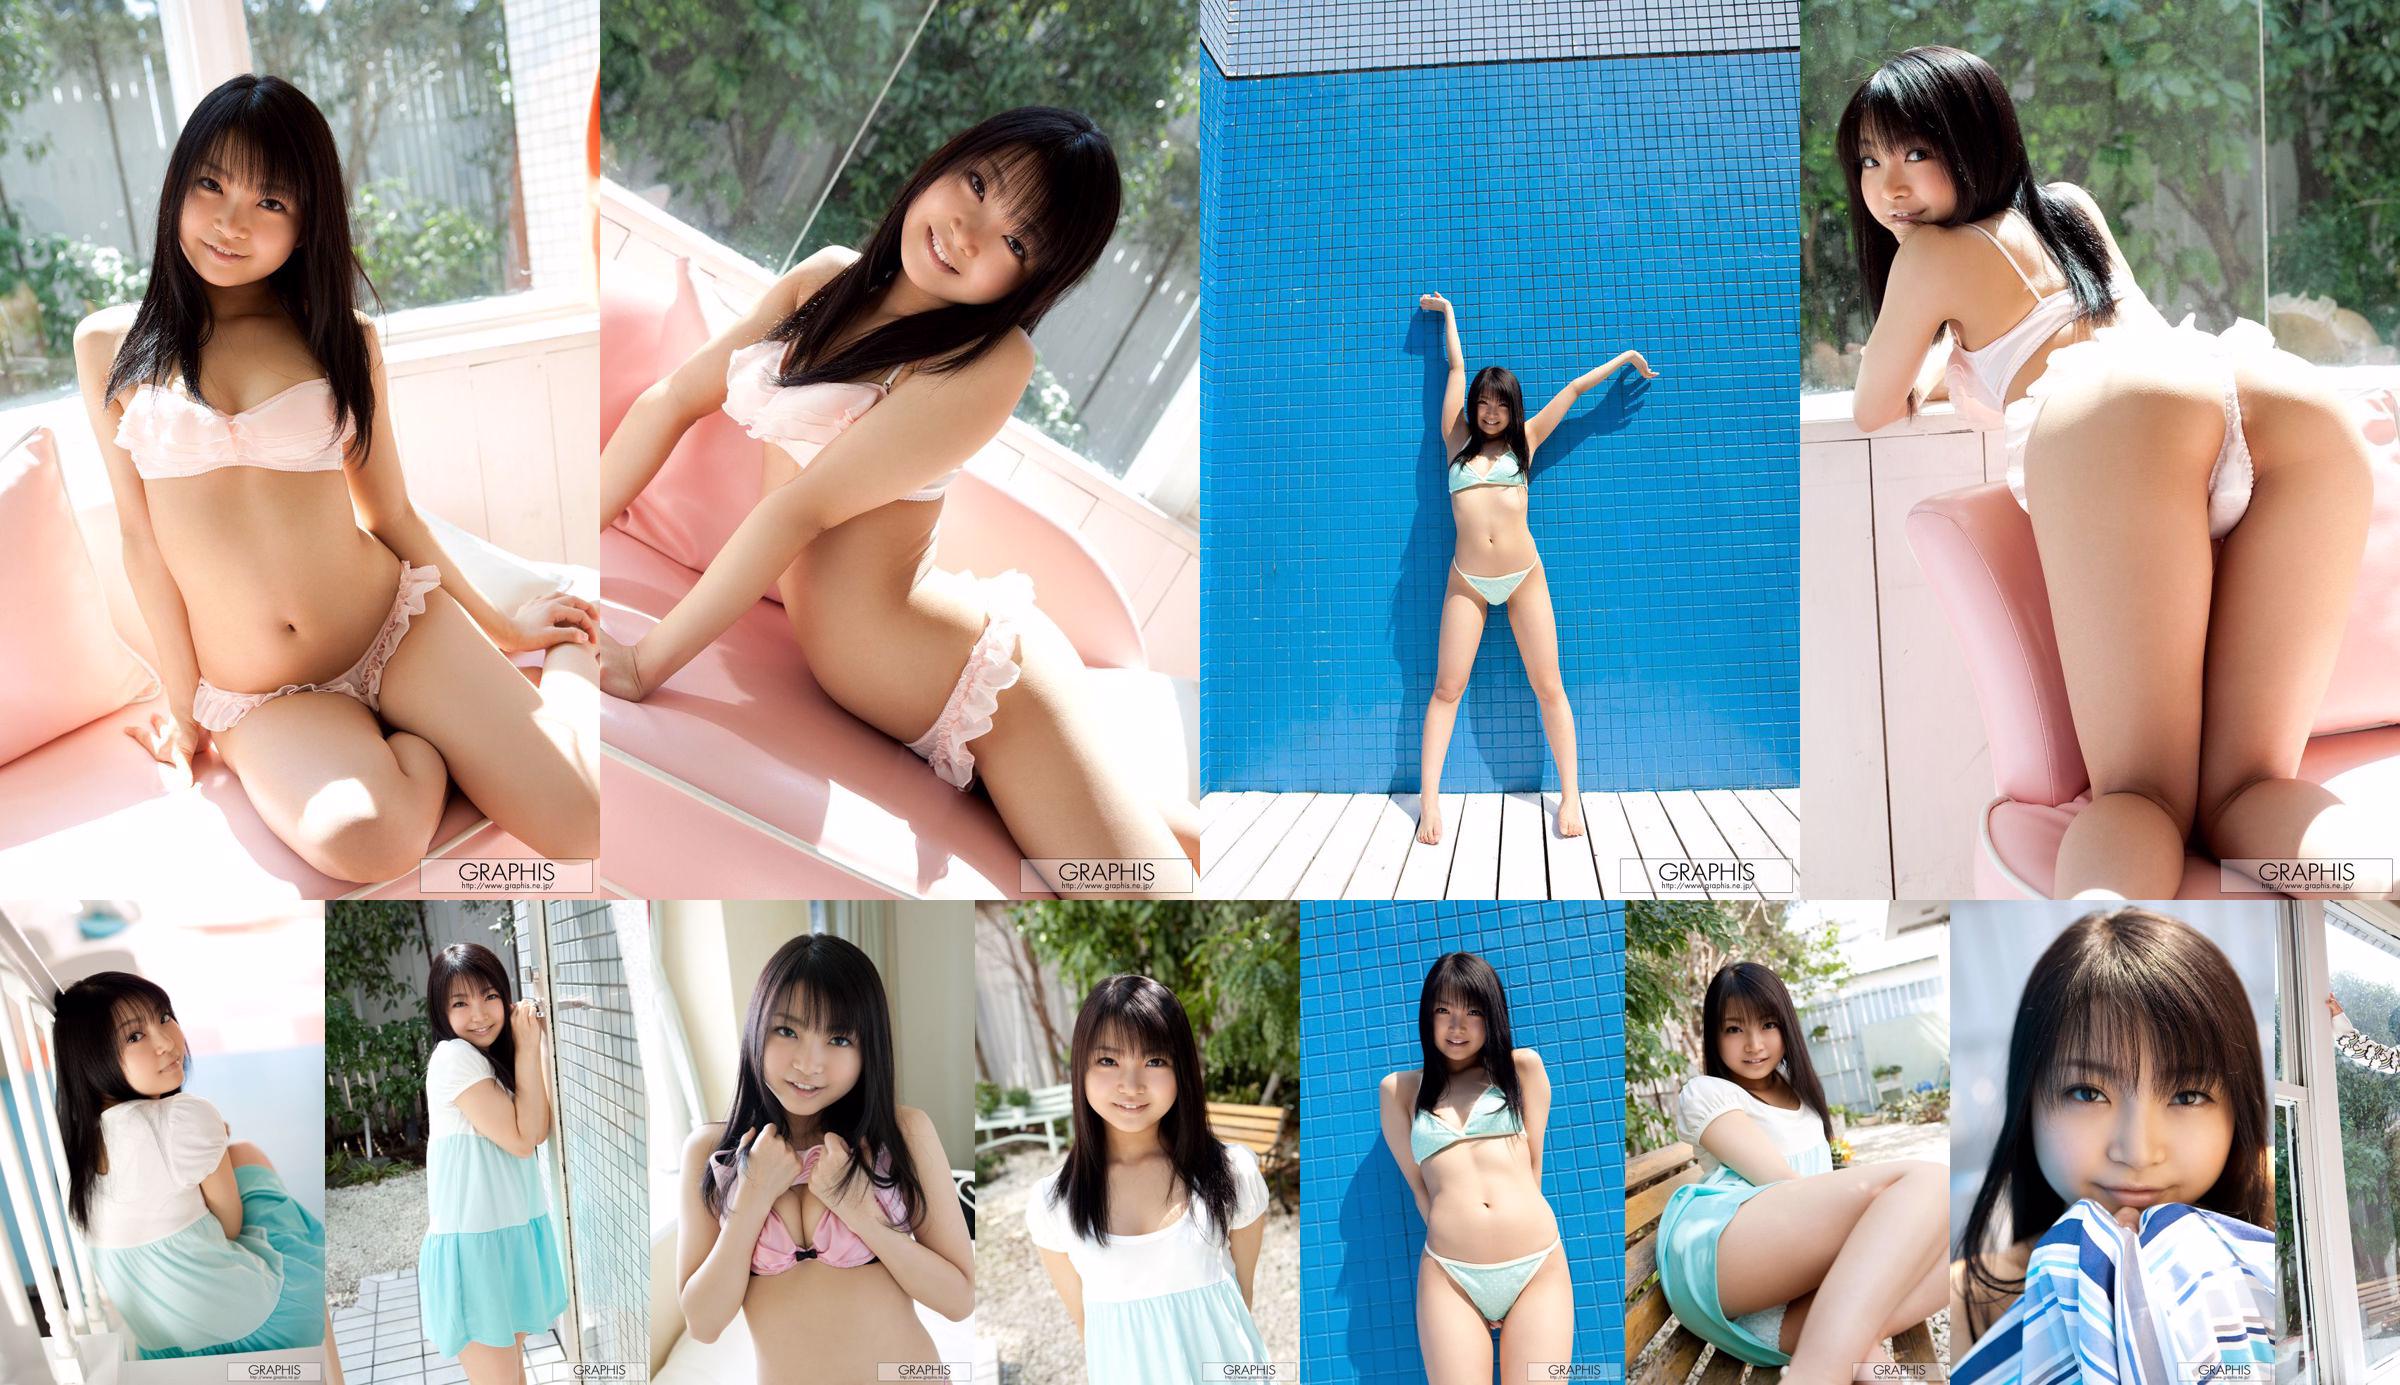 Chihiro Aoi / Chihiro Aoi [Graphis] Primera fotograbado Primera hija No.068d36 Página 2